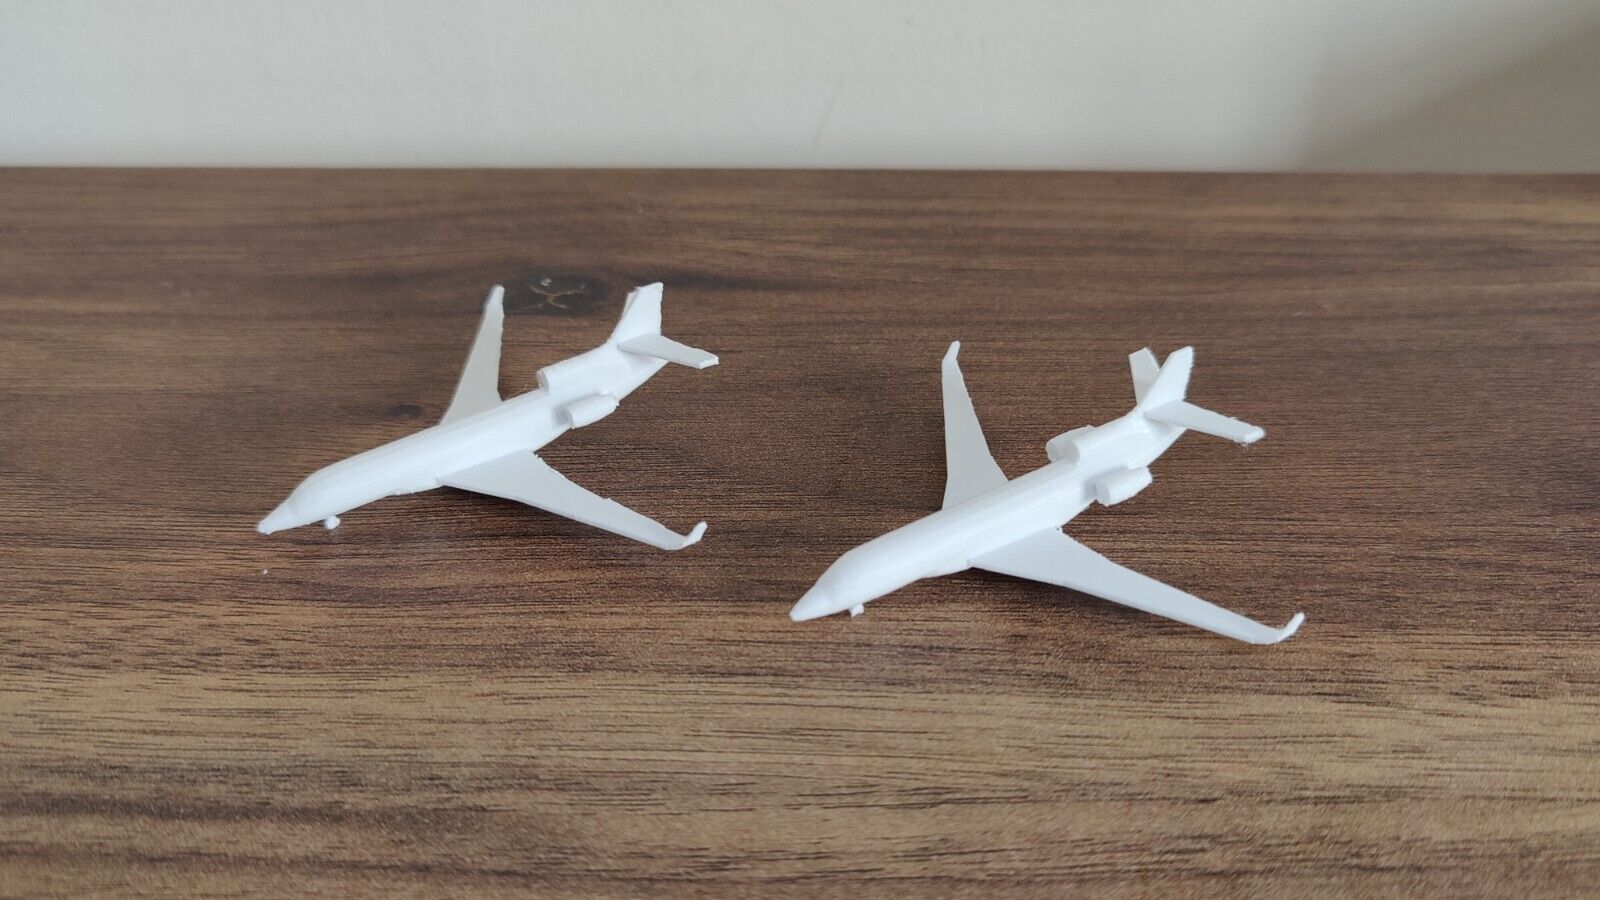 2x Dassault Falcon 8X Business Private Jet Models Scenery Diorama 1:400 Scale